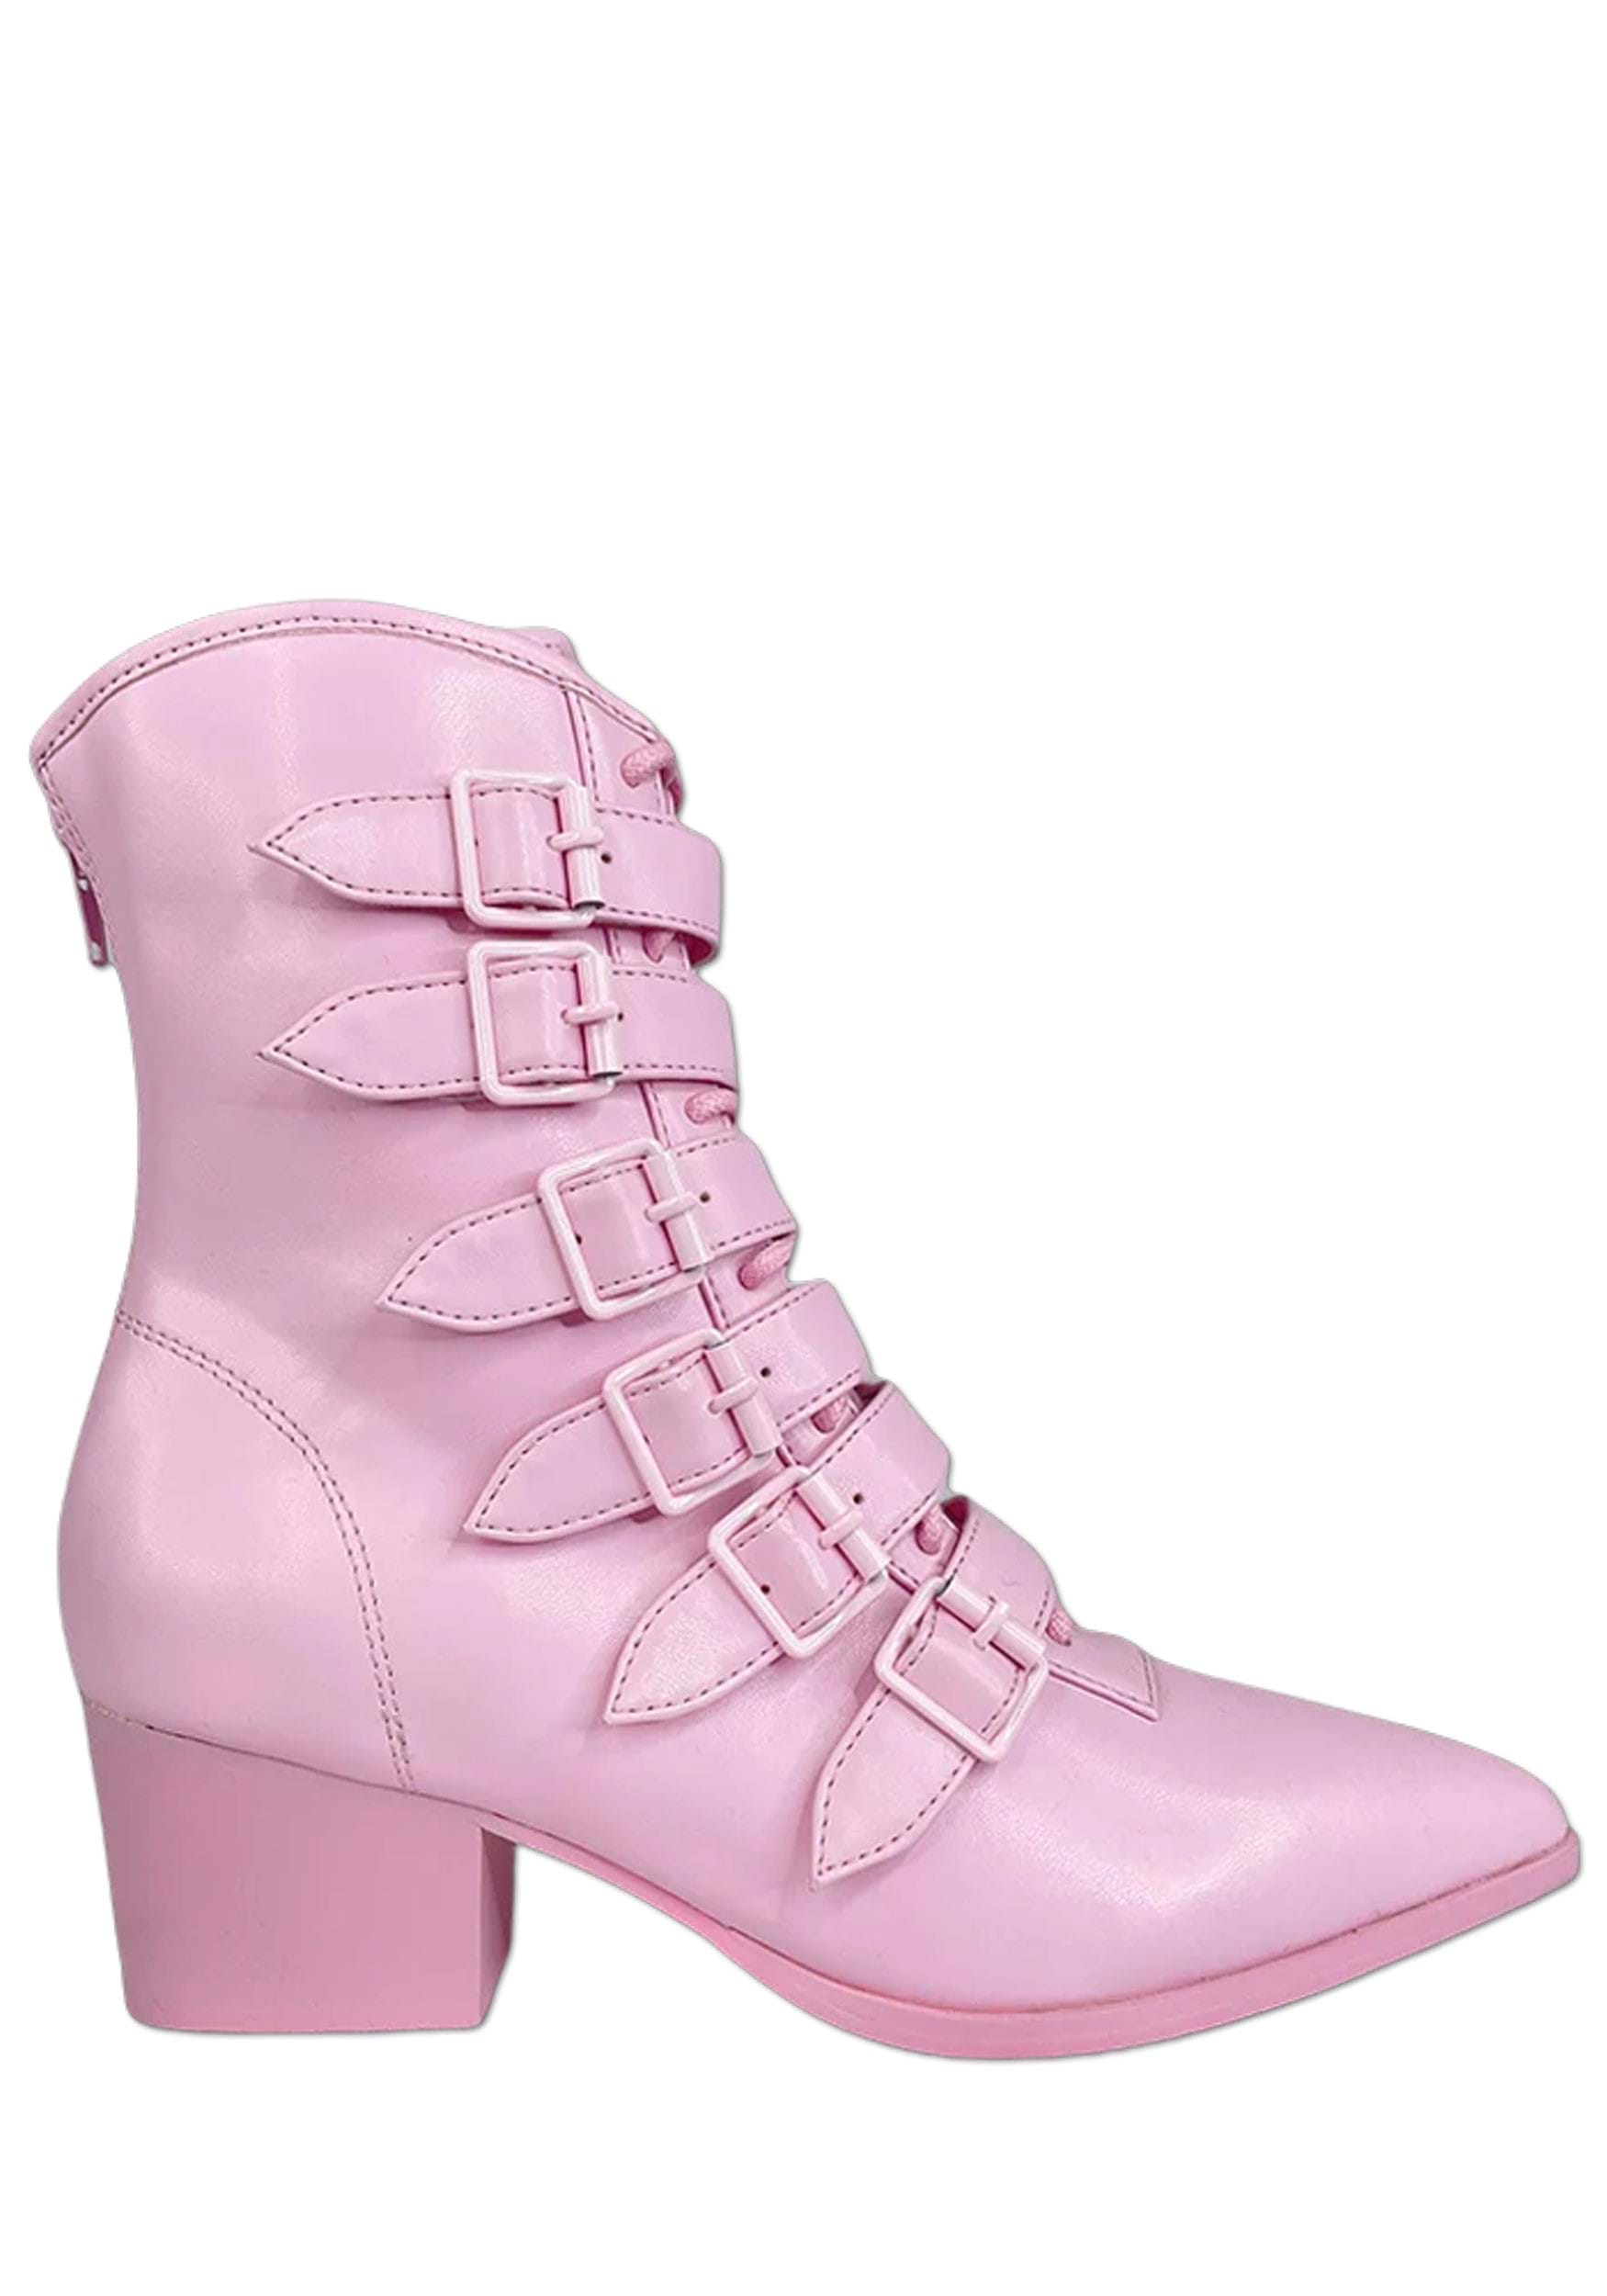 Women's Pastel Pink Buckle Boots